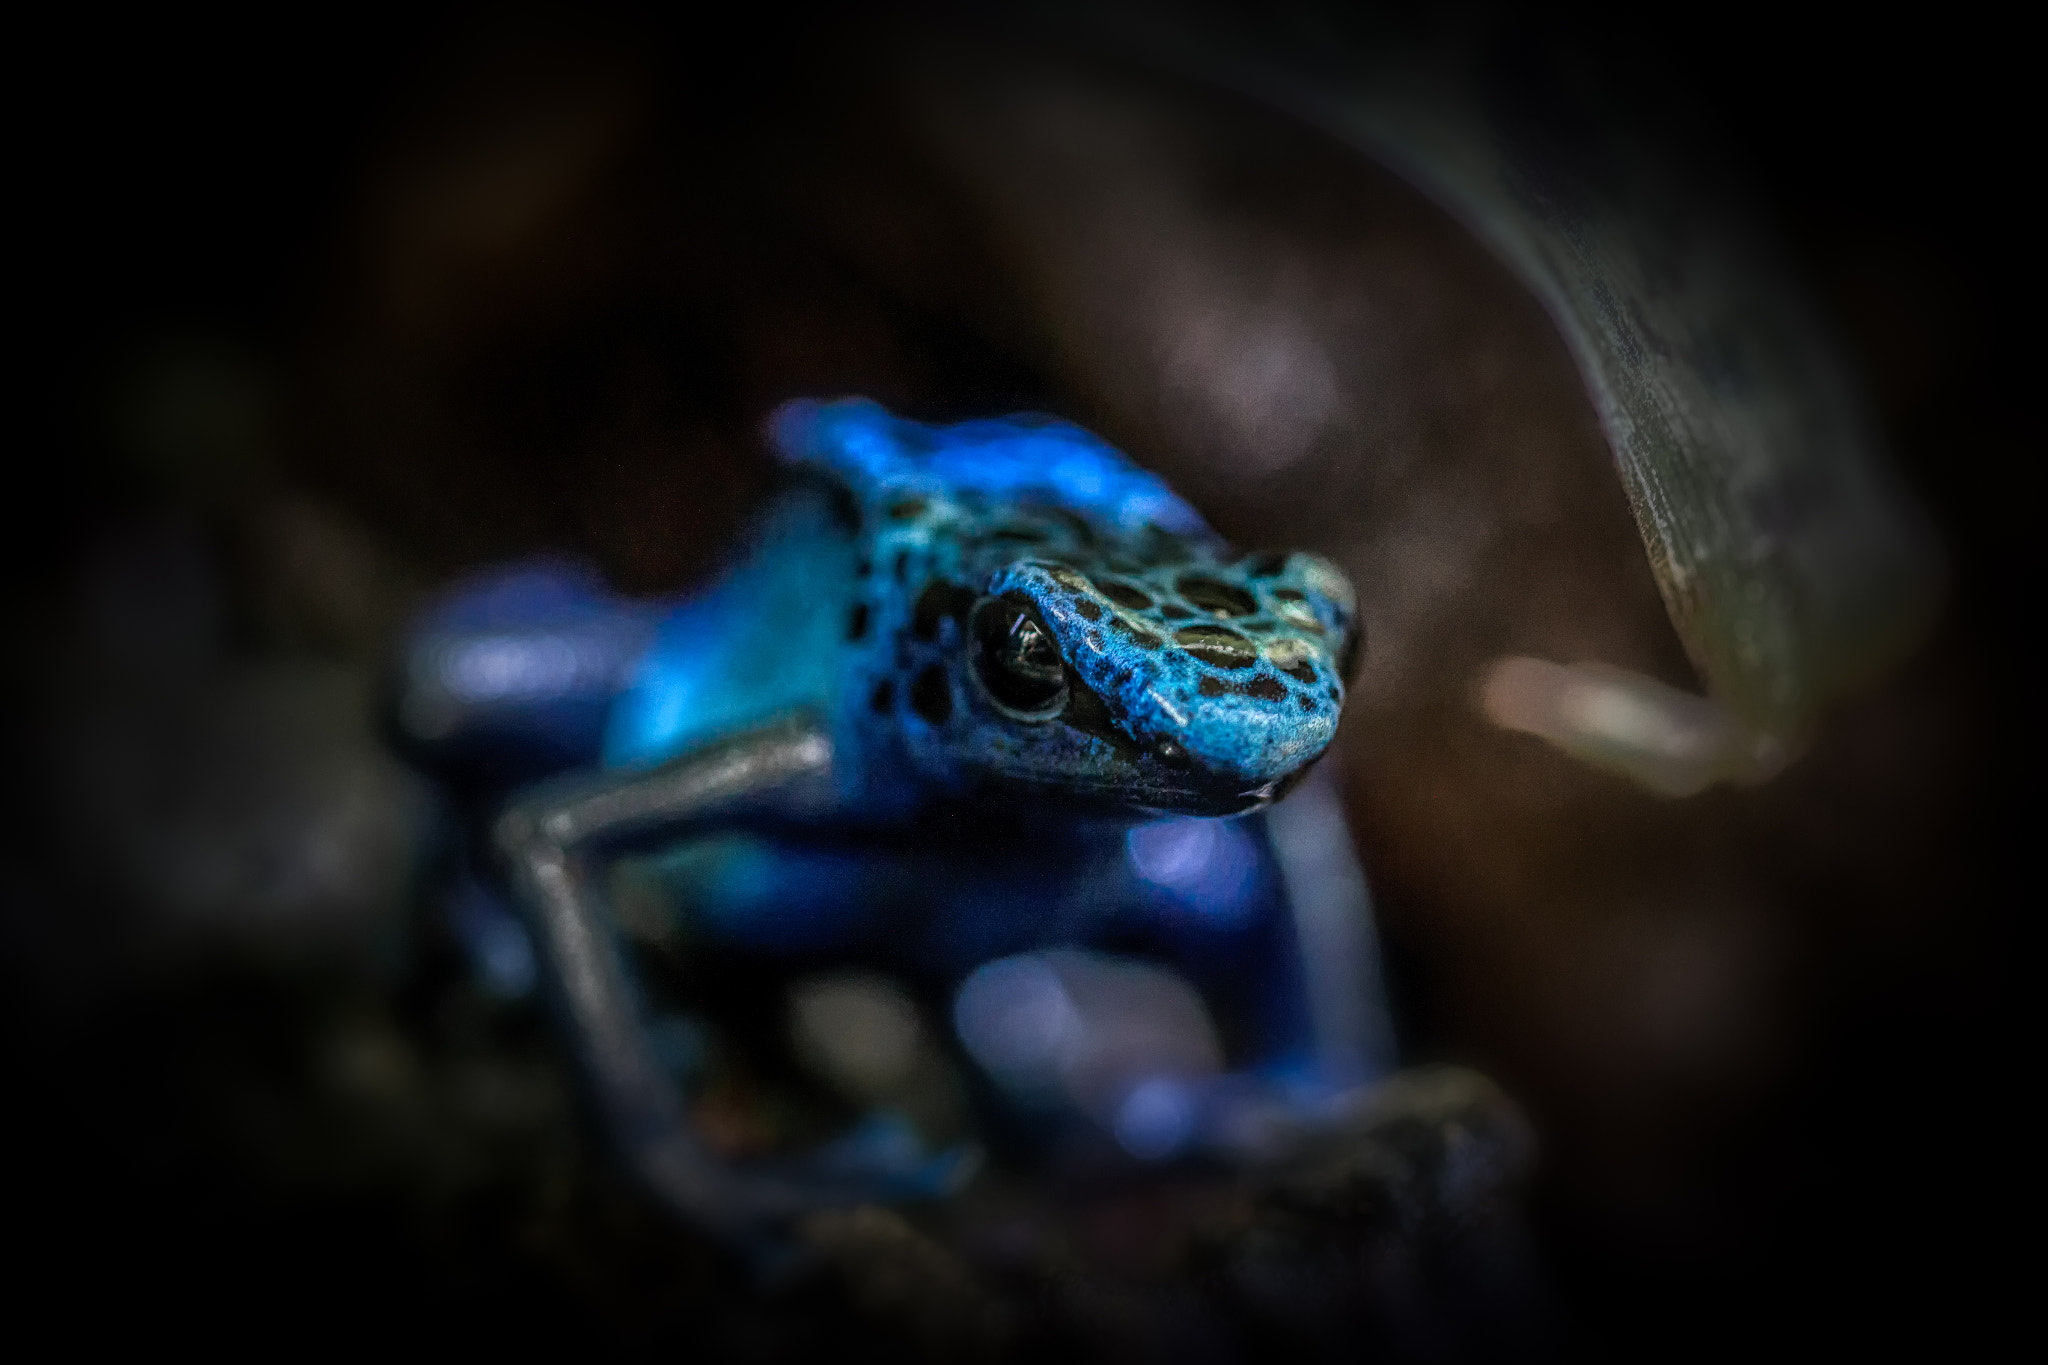 General 2048x1365 animals poison dart frogs blue depth of field closeup frog amphibian cyan vignette